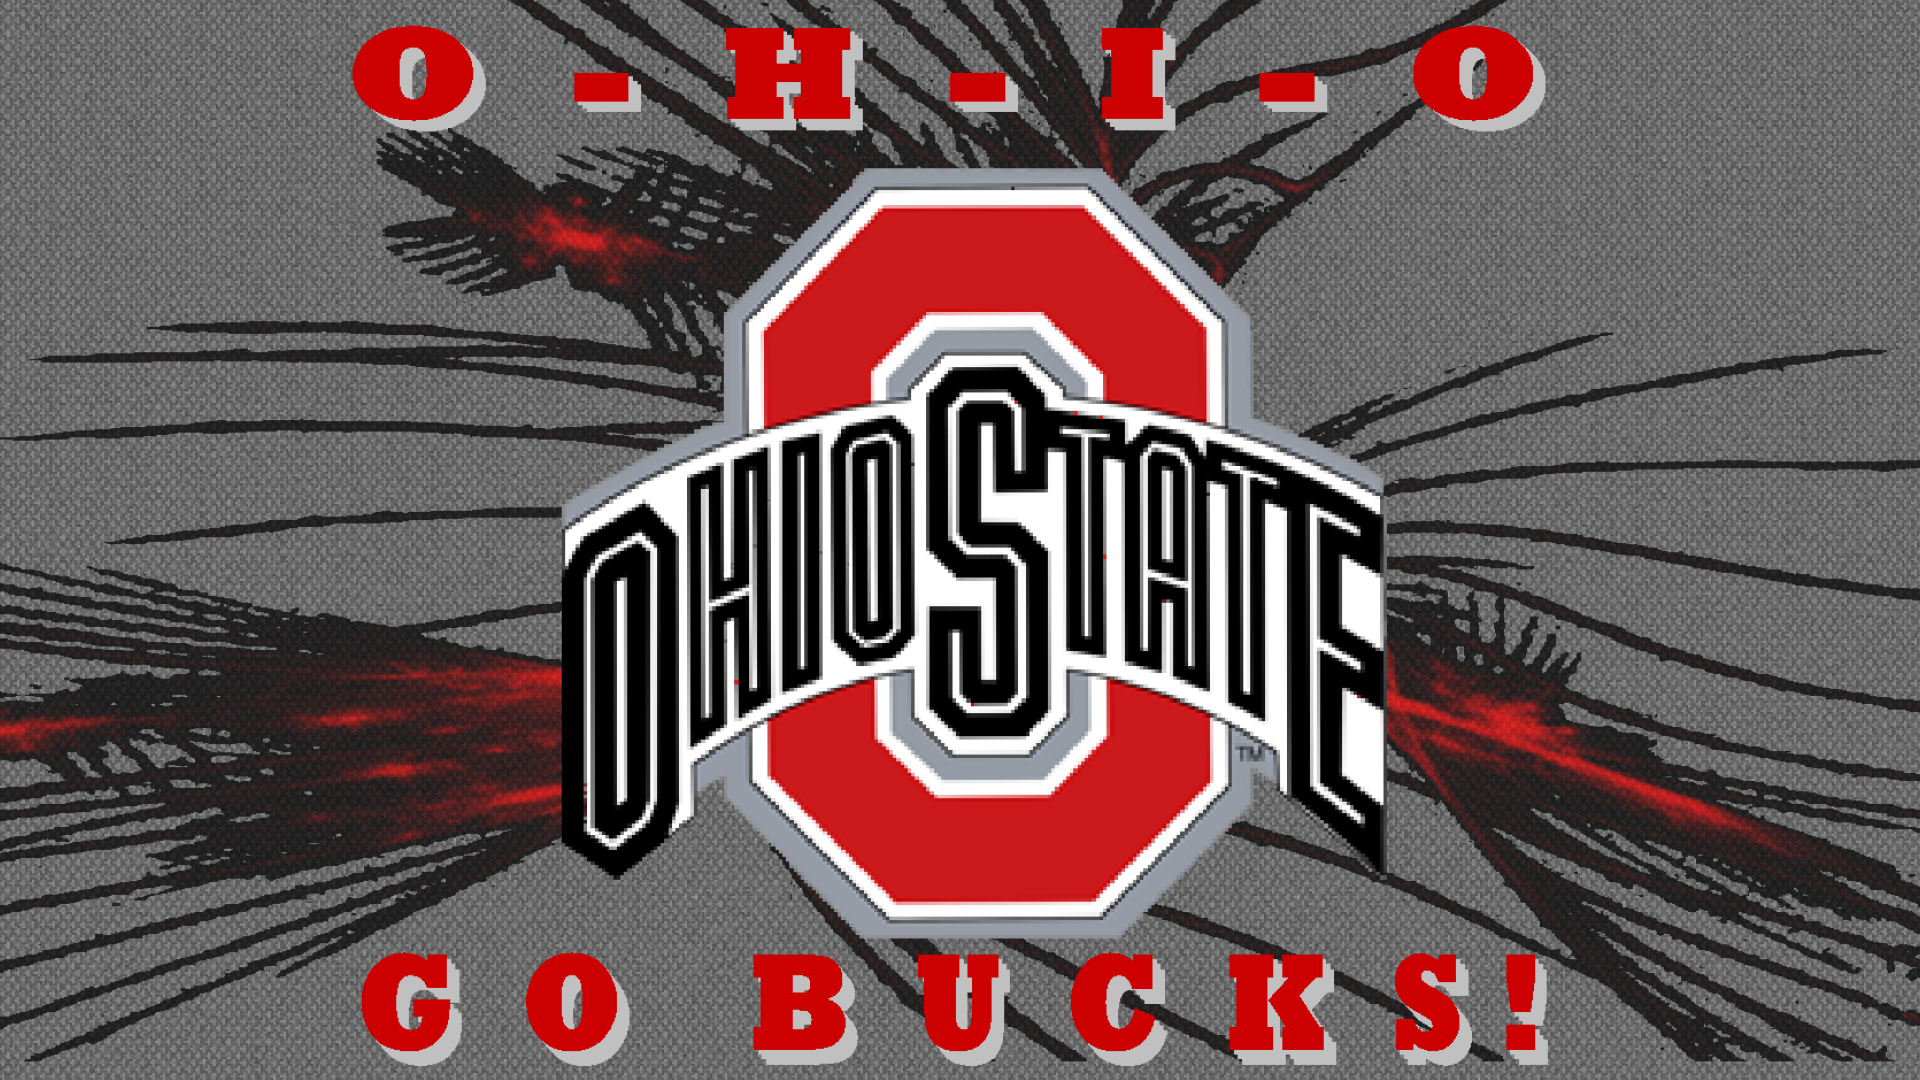 Go Bucks Ohio State University Basketball Wallpaper